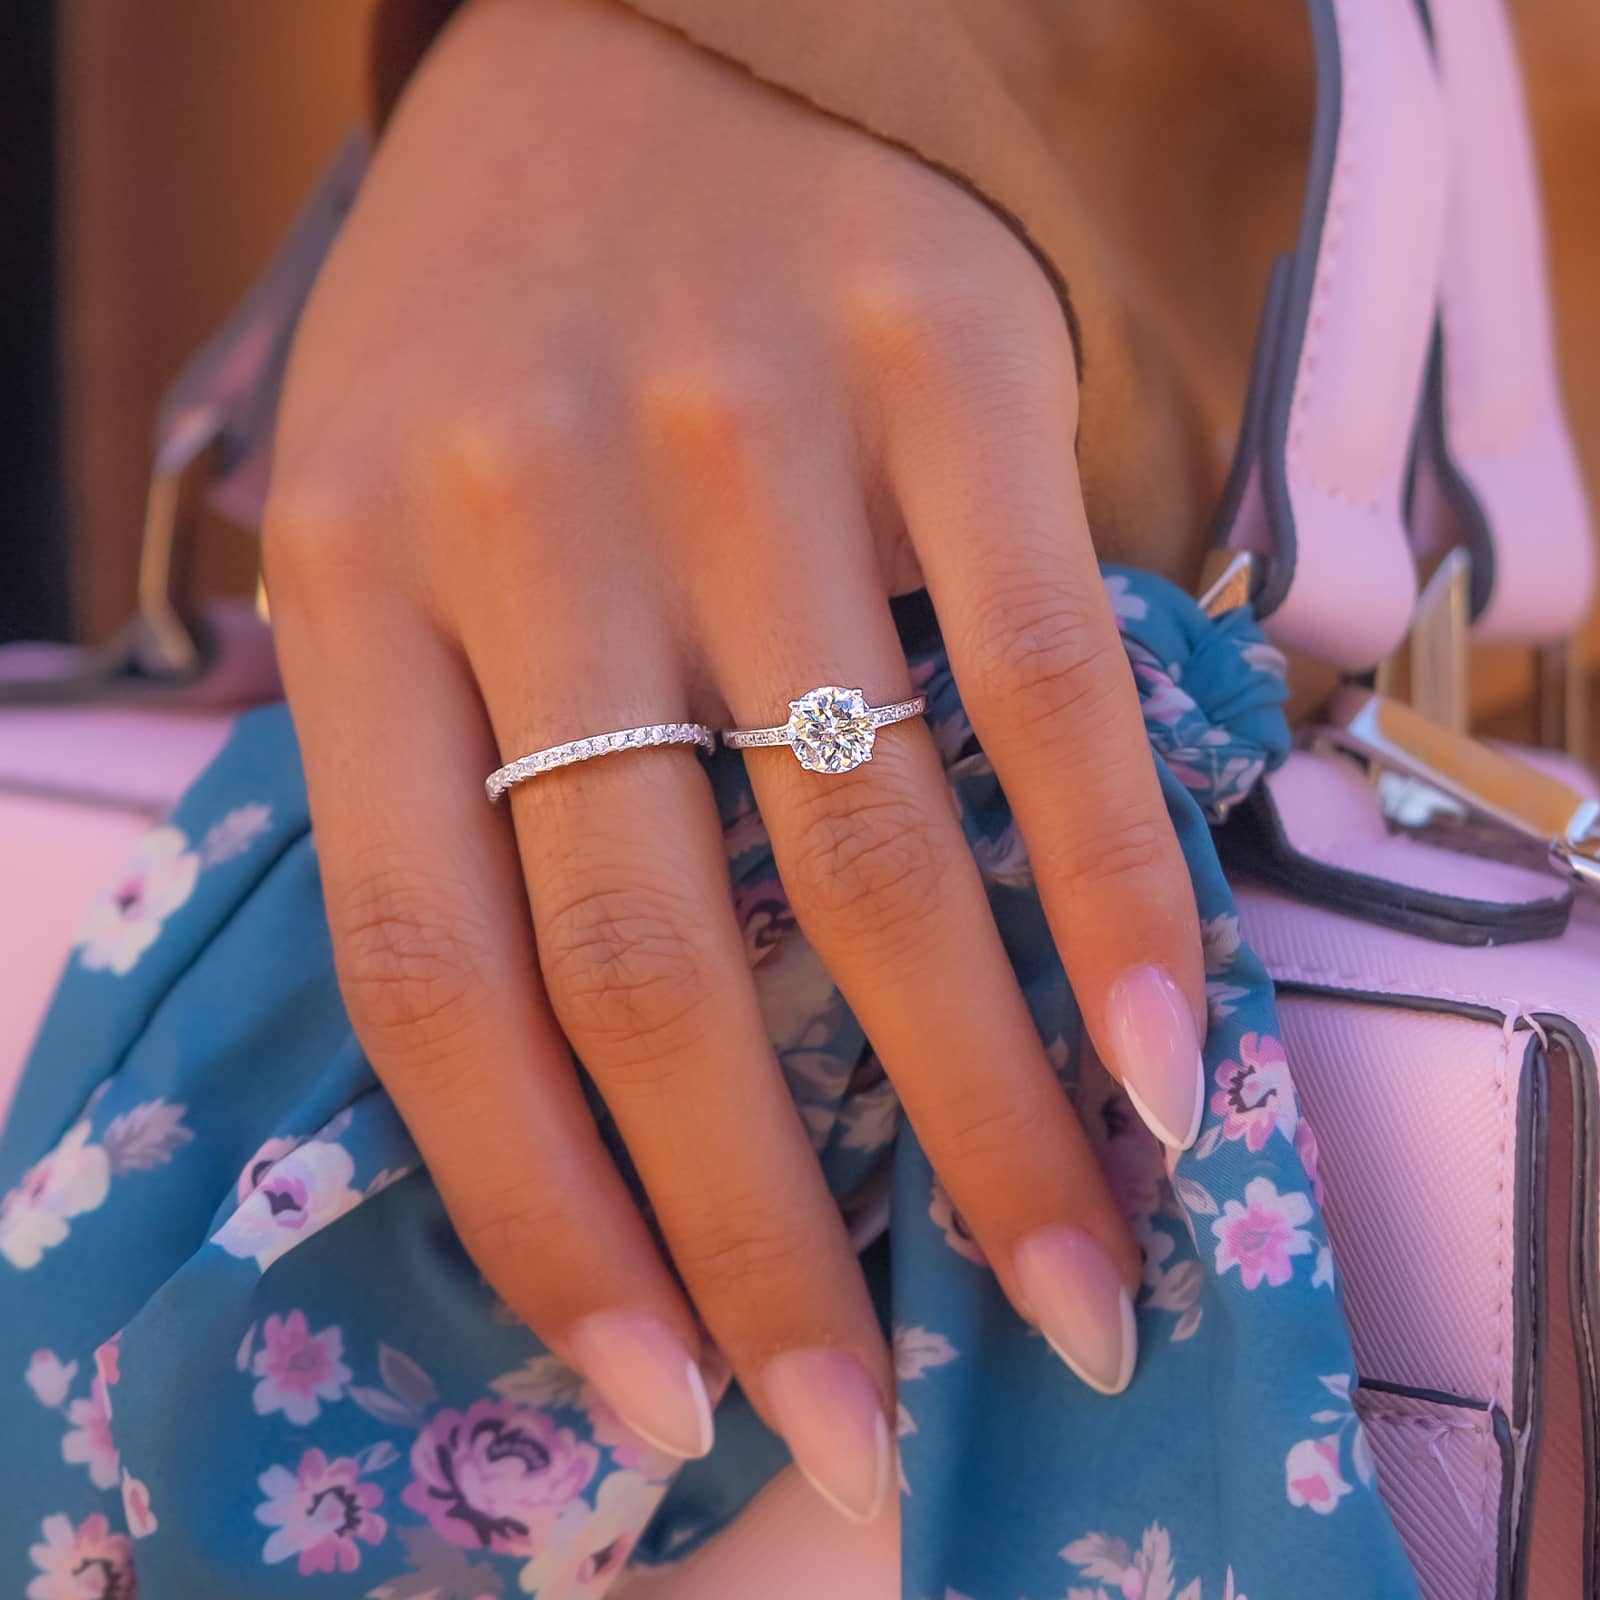 Female hand wearing wedding rings